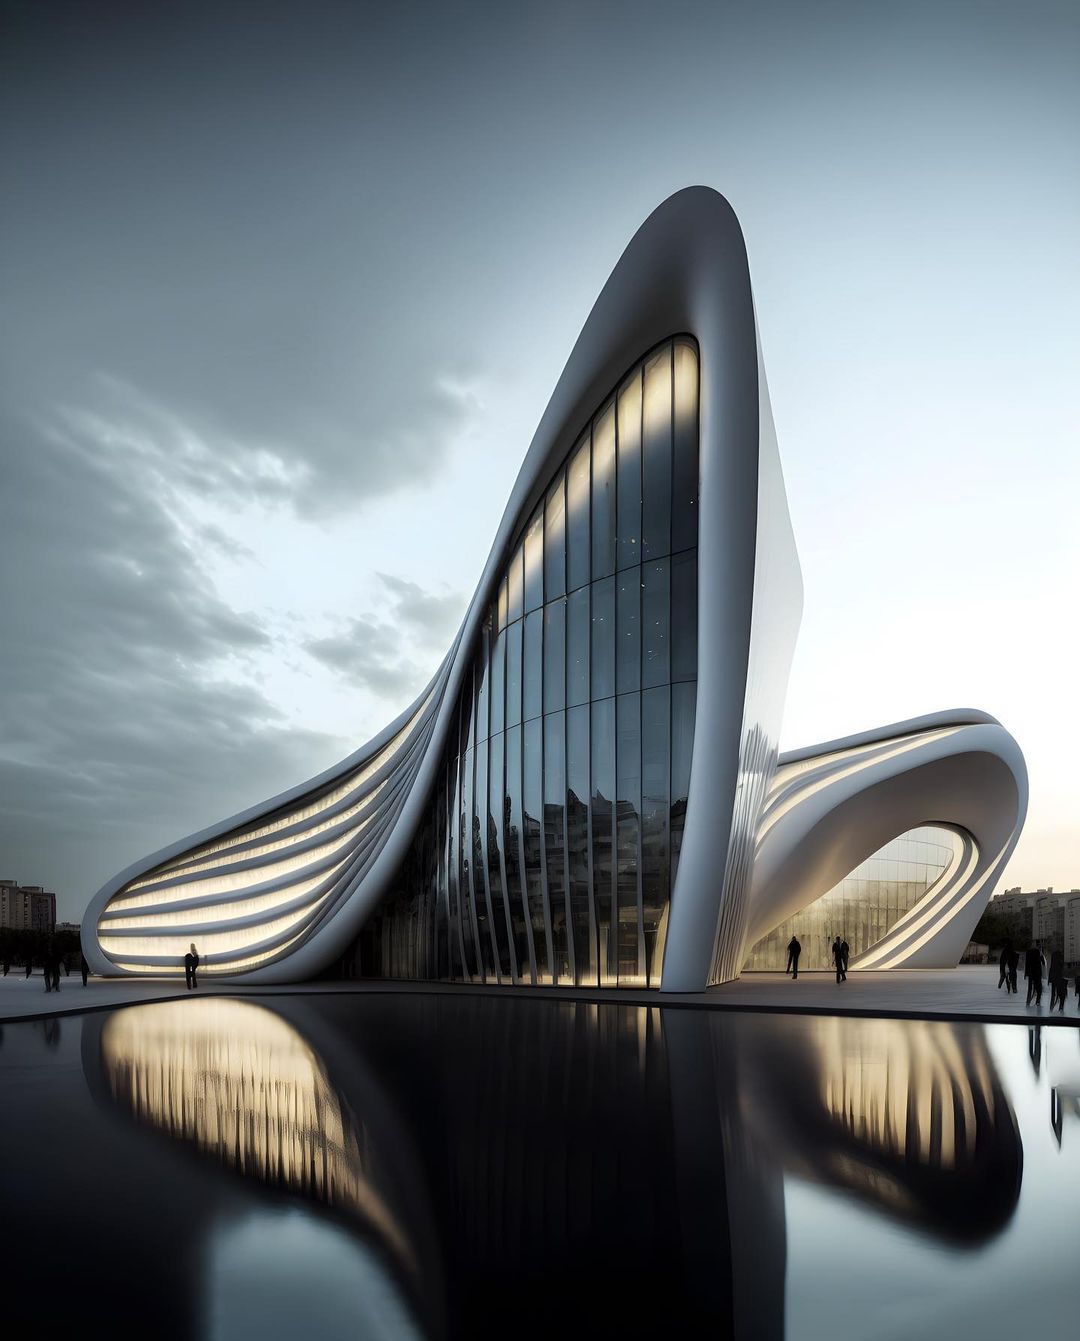 Futuristic curvy building by Tim Fu